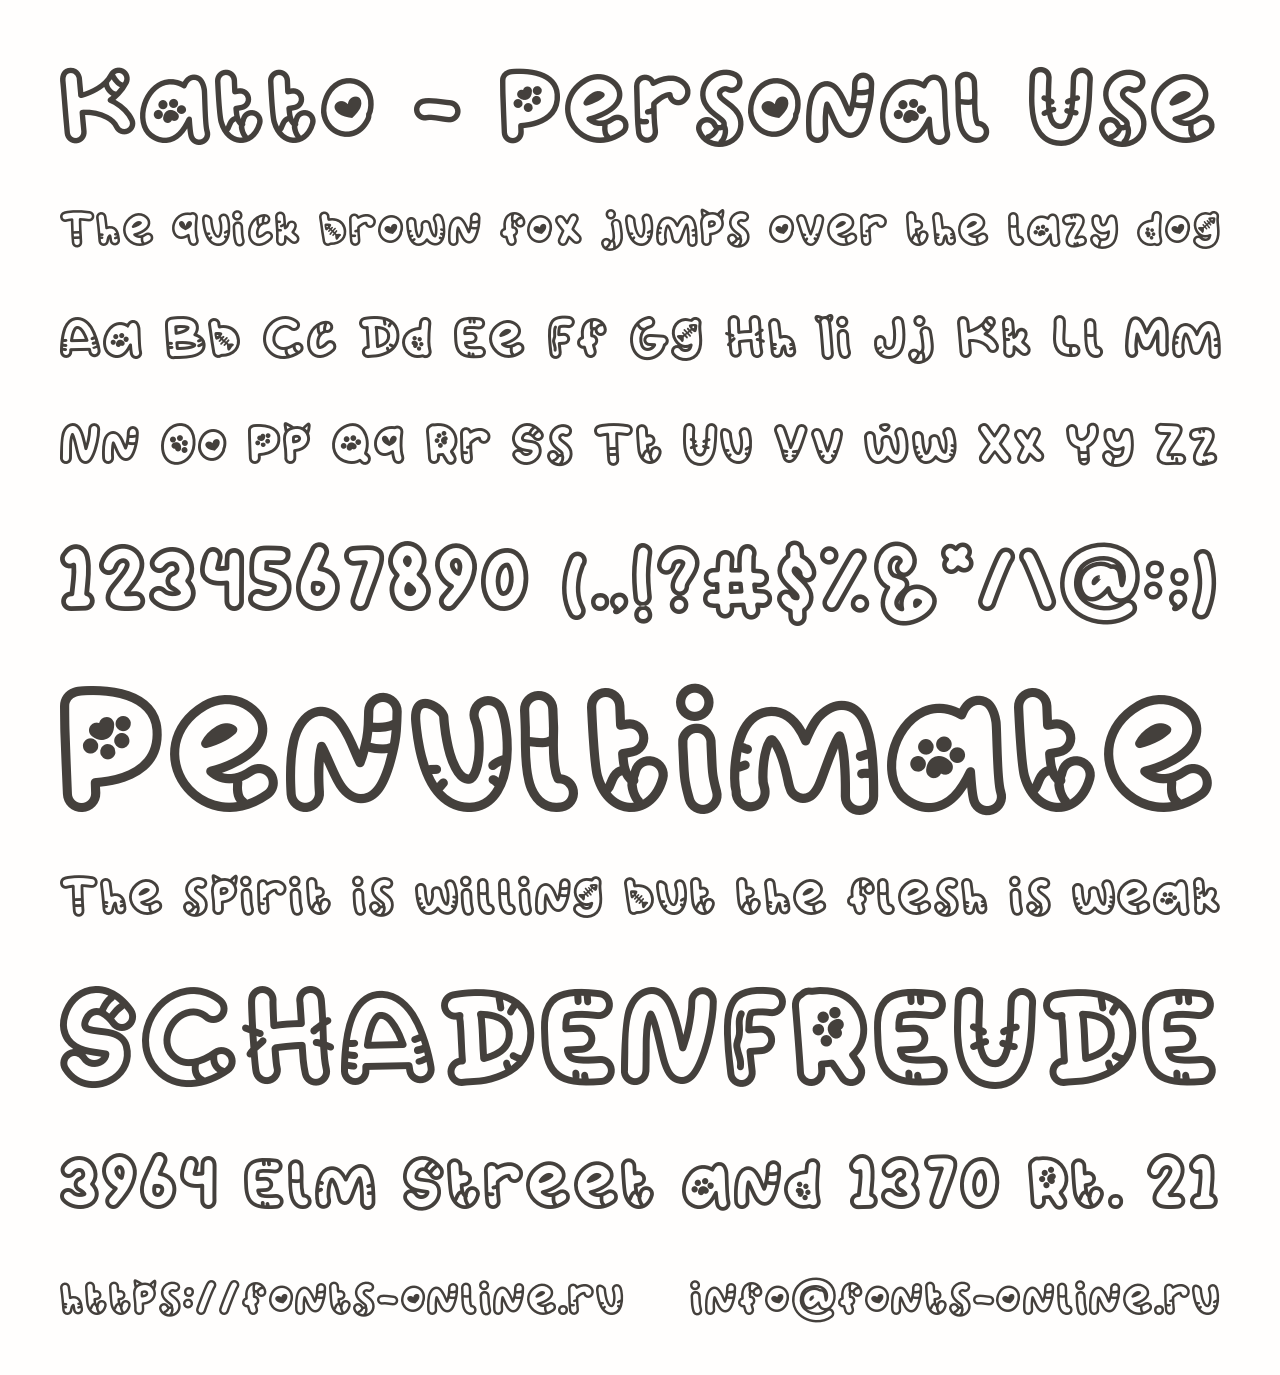 Шрифт Katto - Personal Use